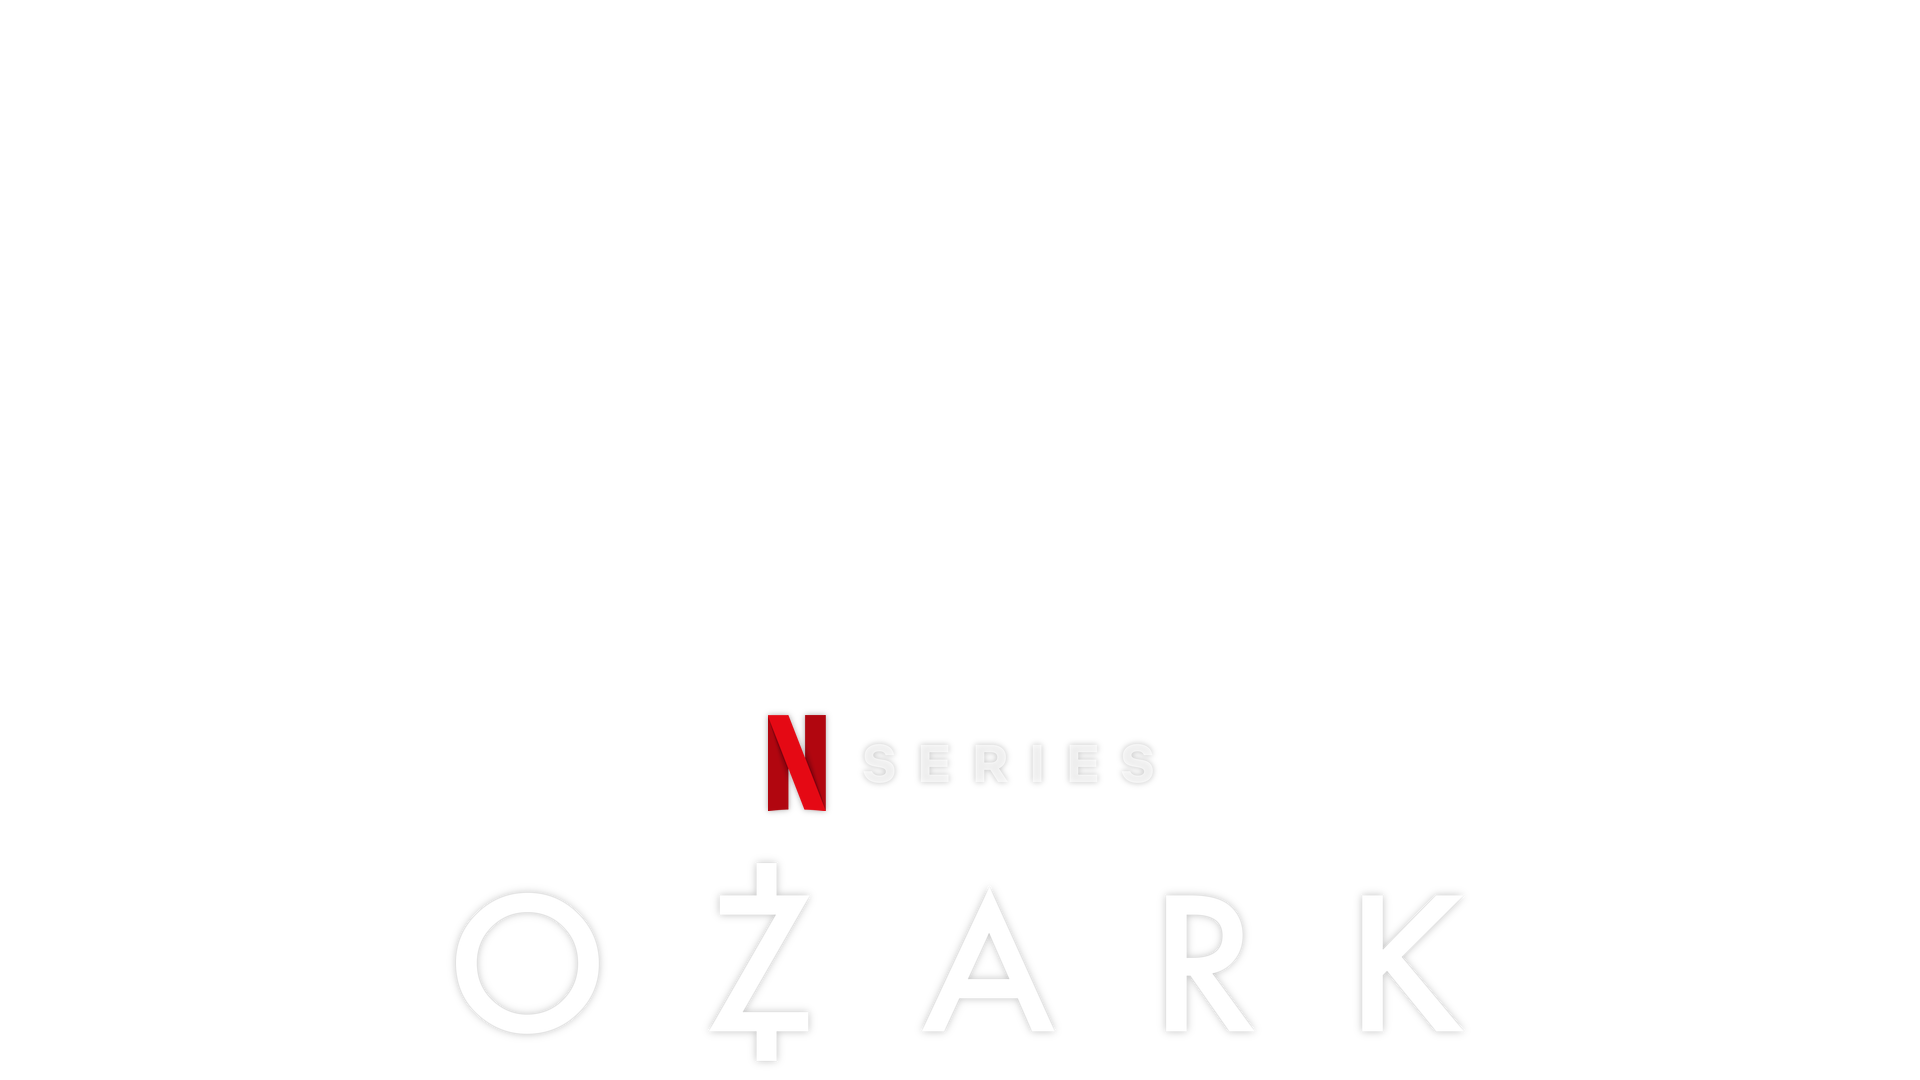 Ozark season 4 cast  Full list of characters in Netflix thriller